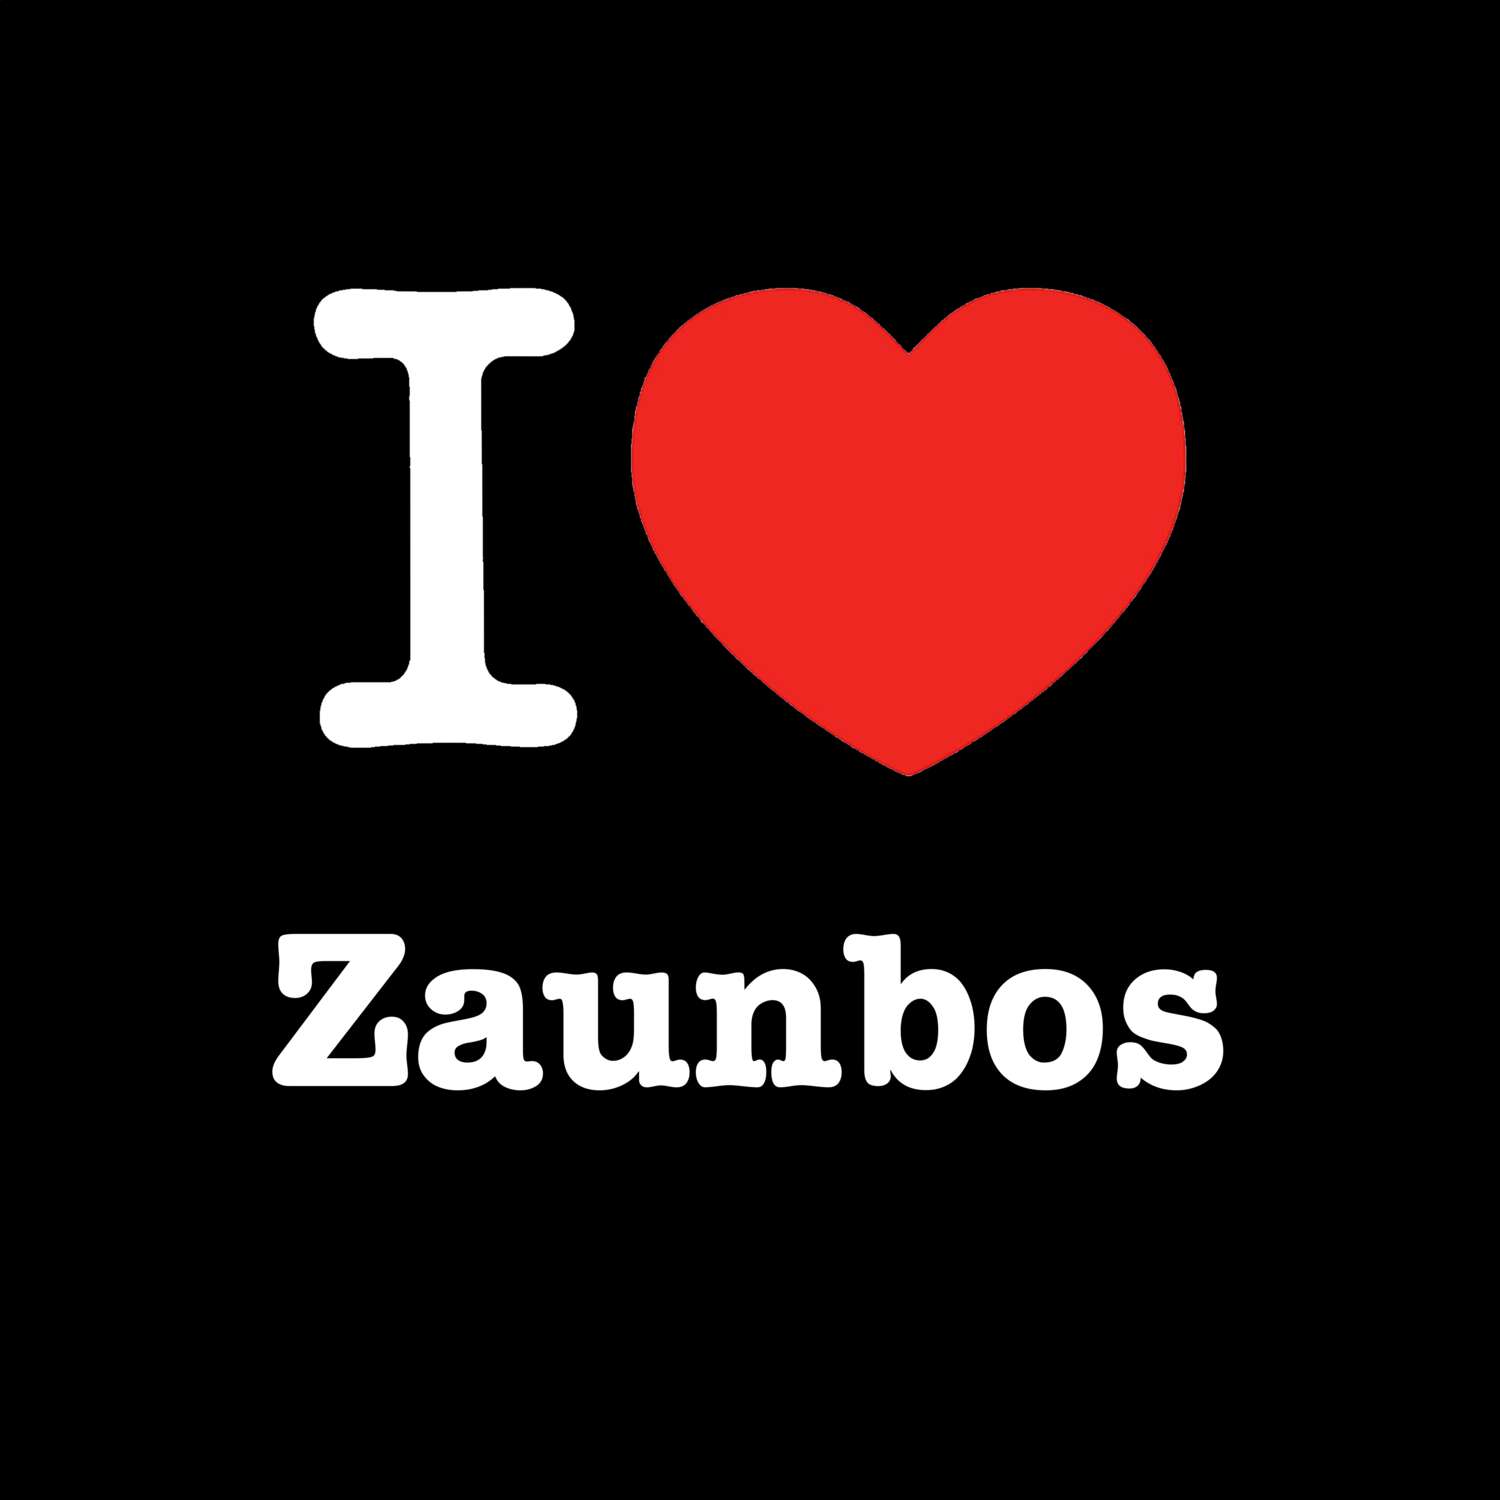 Zaunbos T-Shirt »I love«